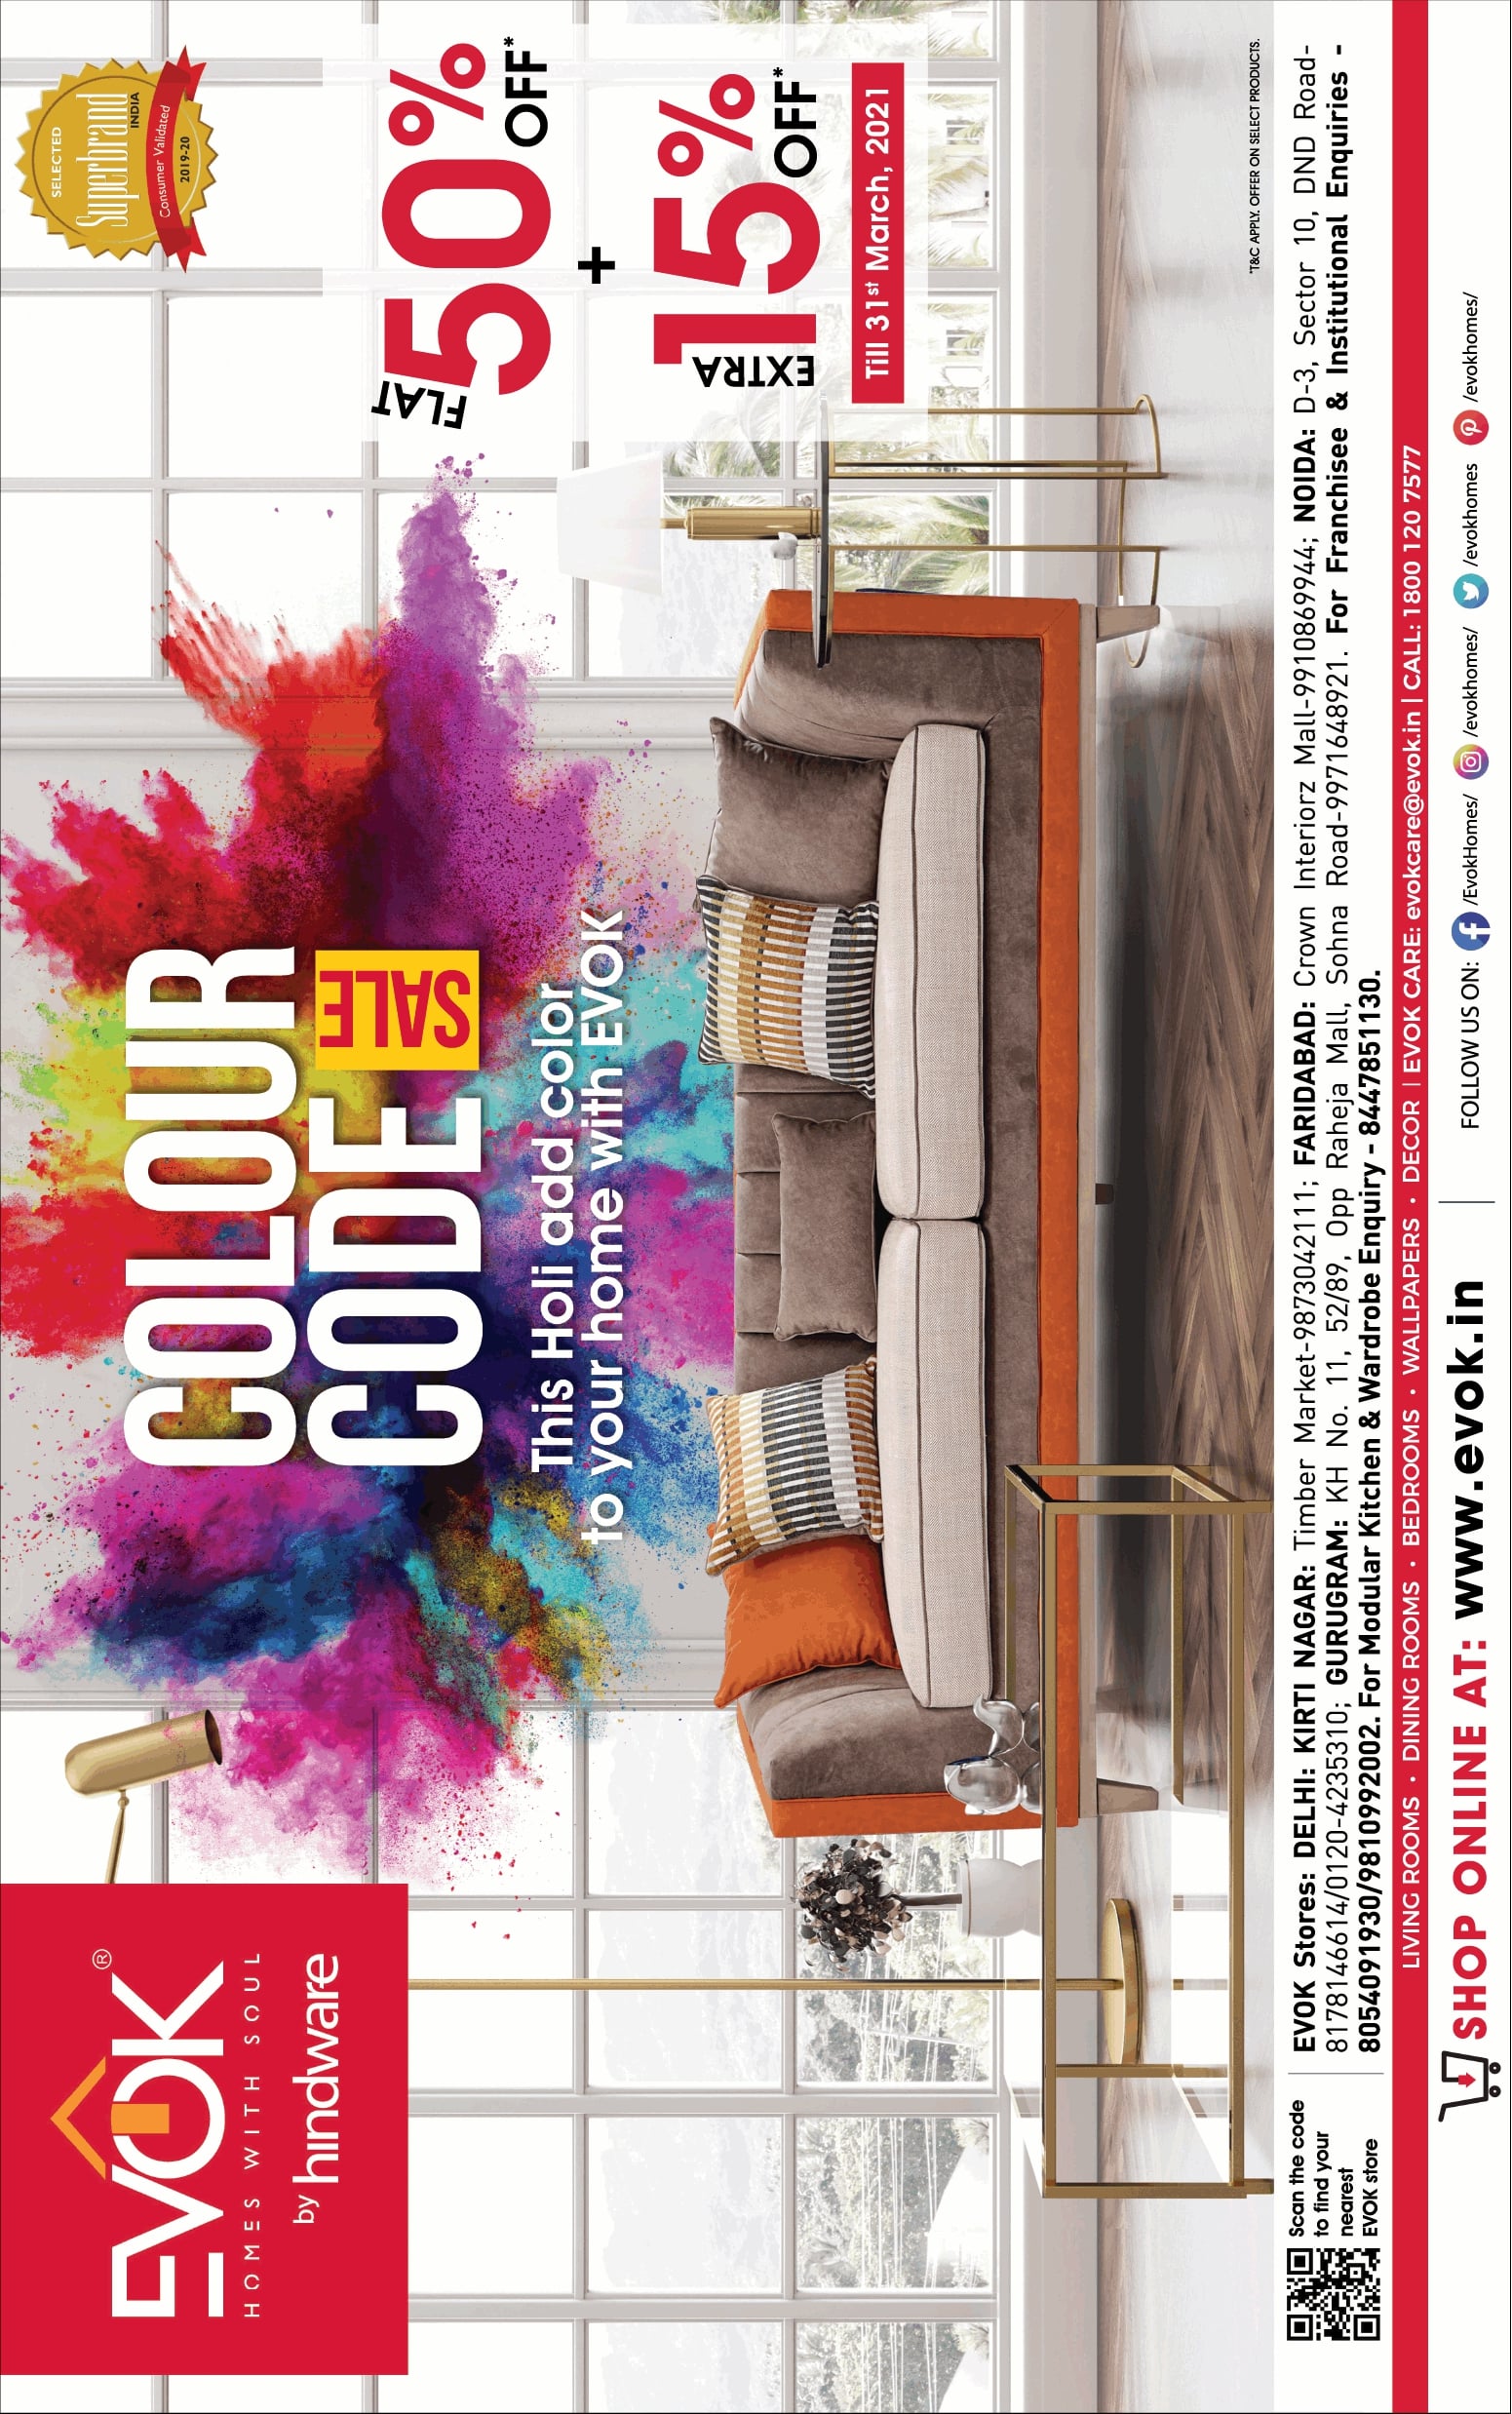 evok-furniture-colour-code-sale-ad-delhi-times-20-03-2021